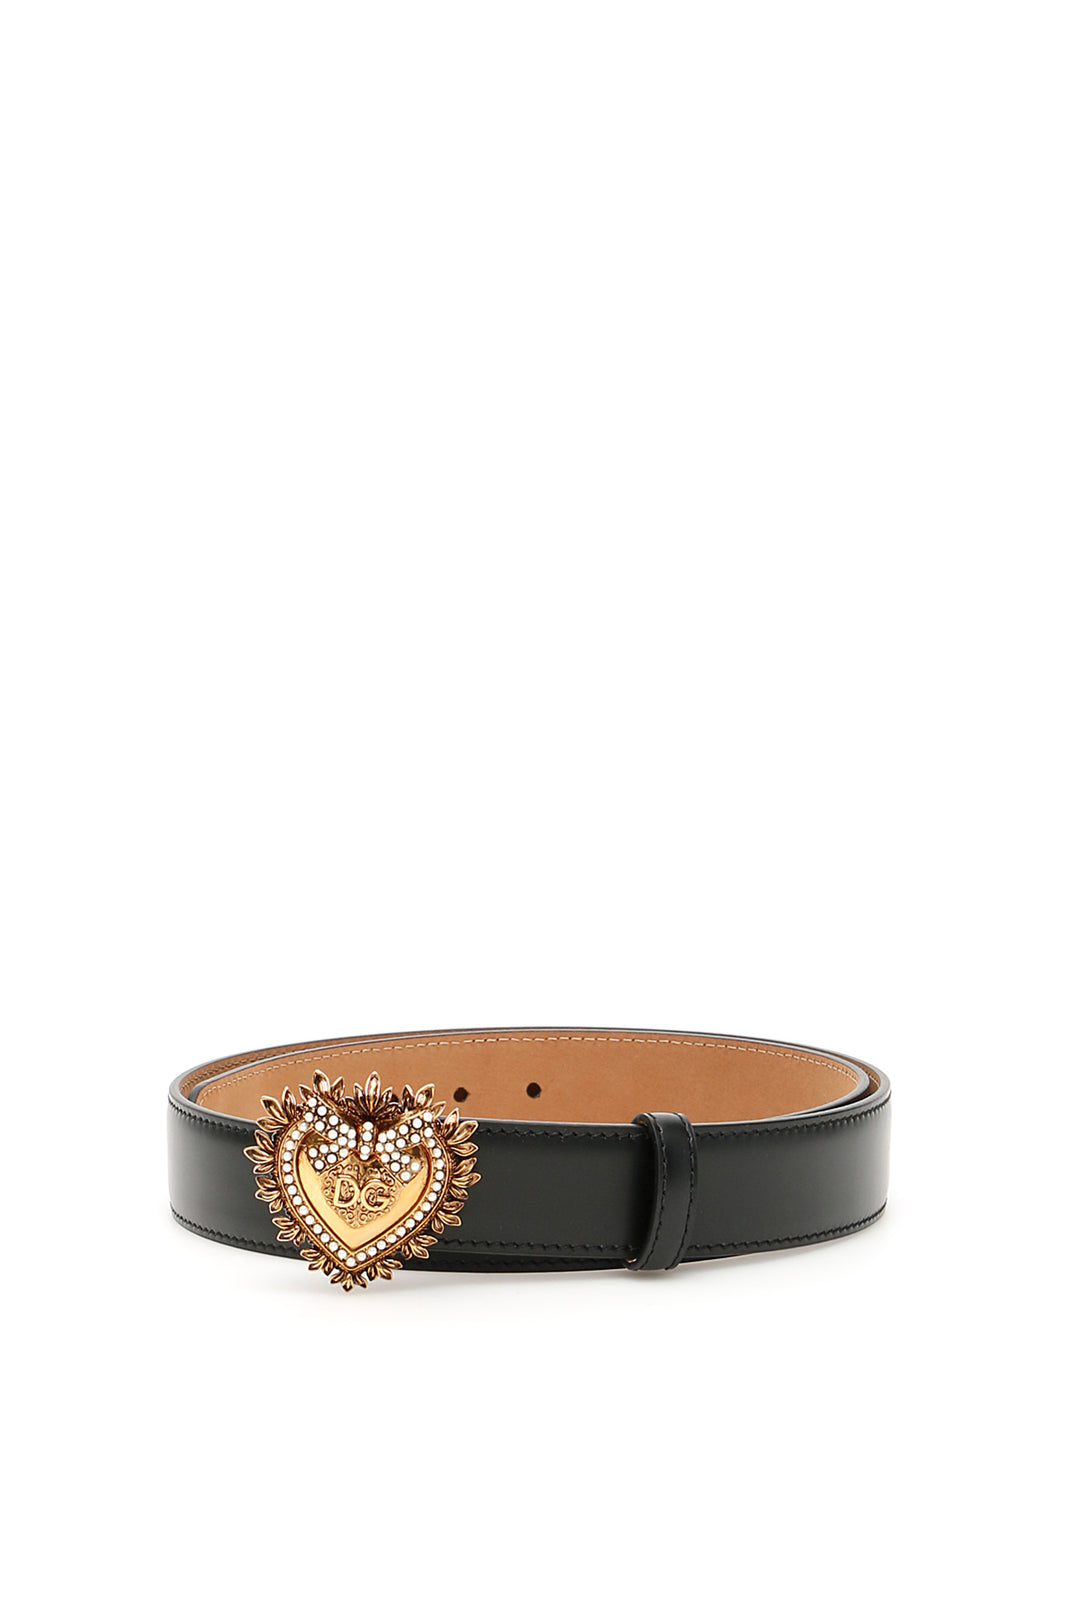 Dolce & Gabbana Devotion Leather Belt   Nero